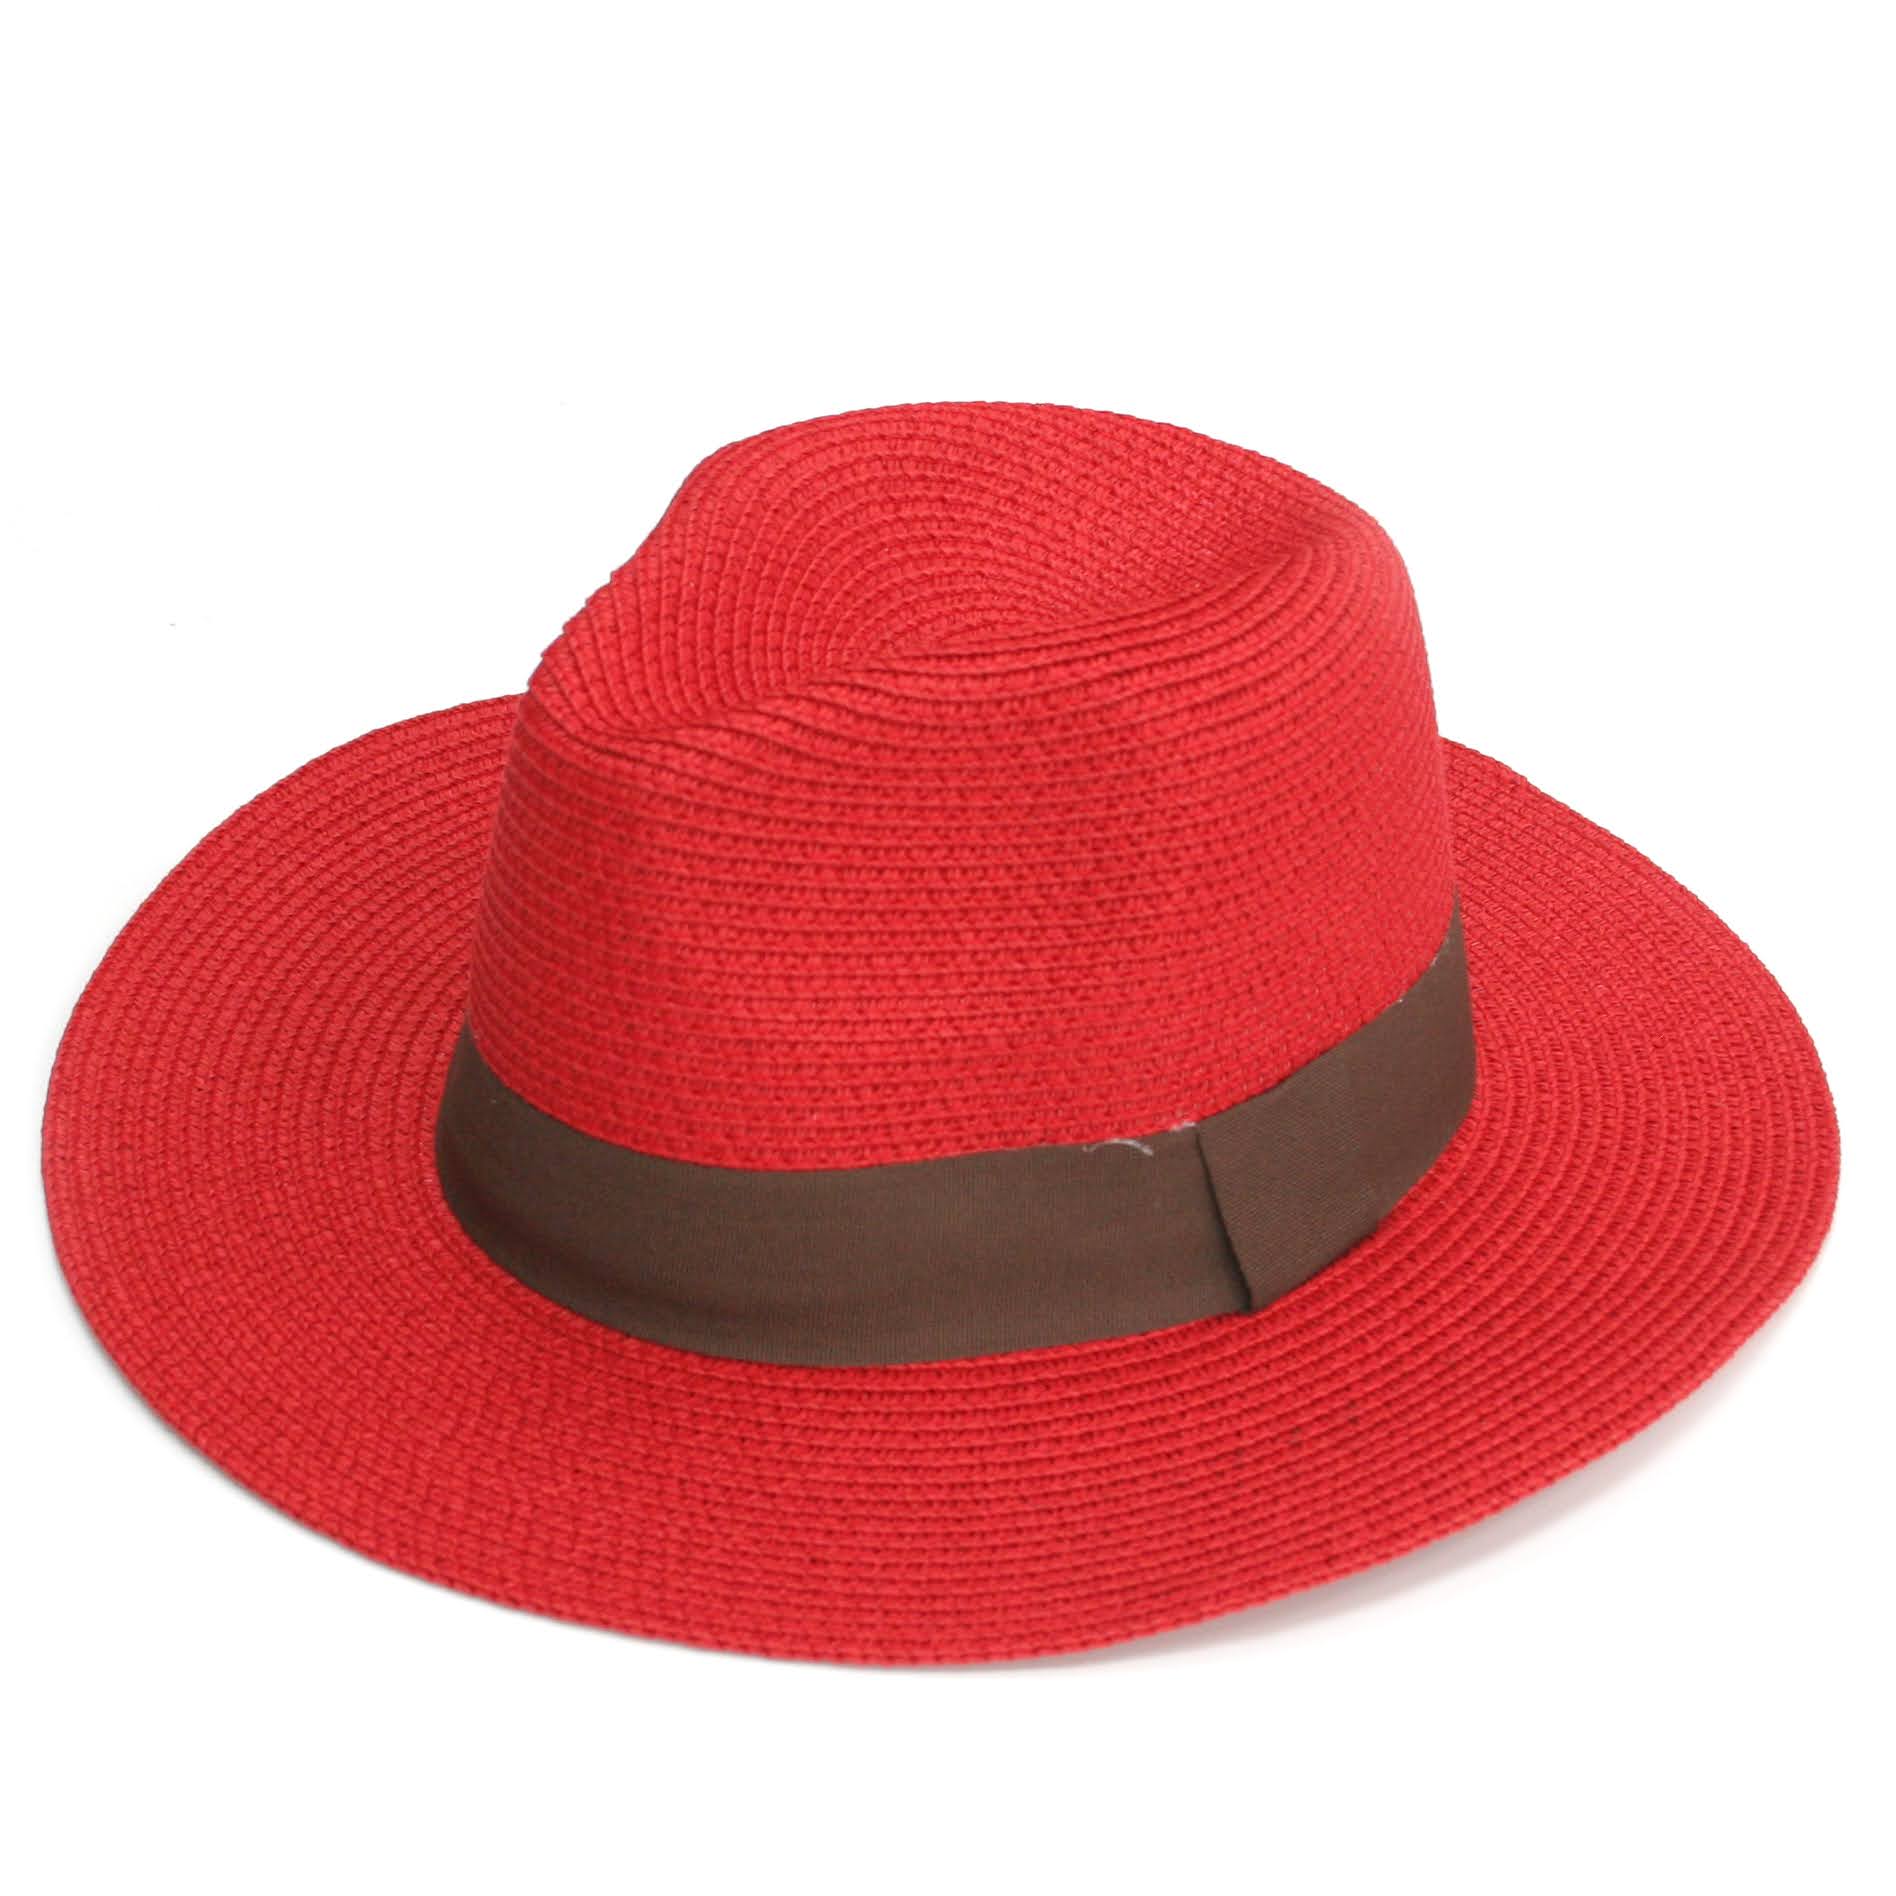 Red Panama Folding Hat